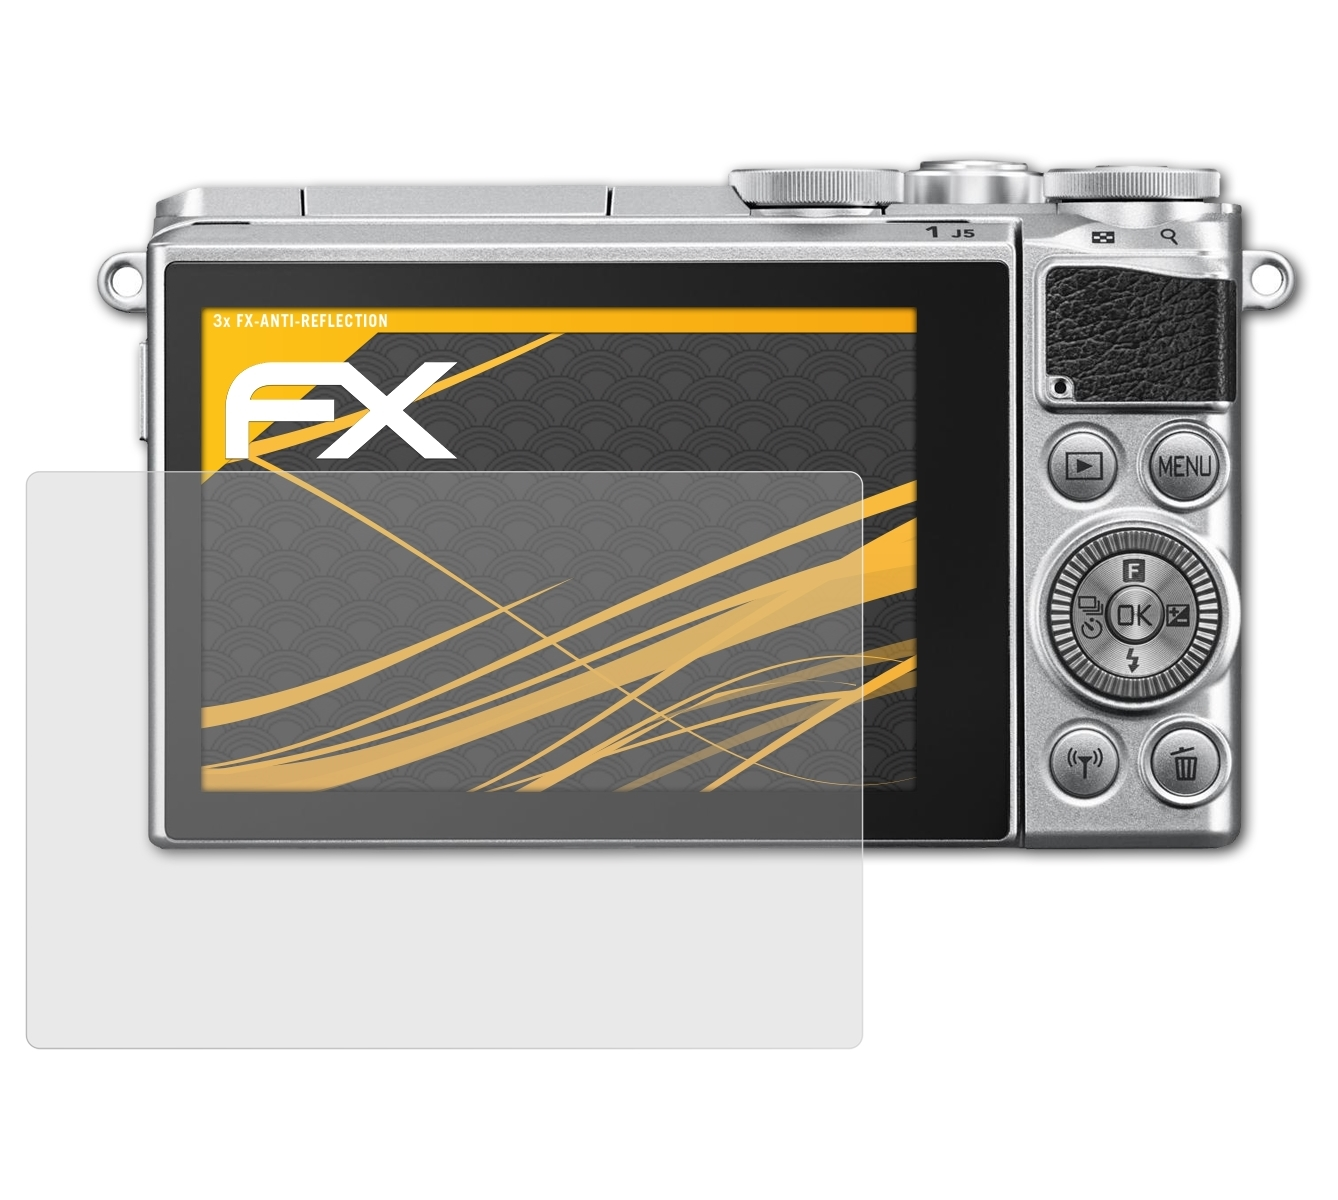 ATFOLIX 3x FX-Antireflex Nikon J5) Displayschutz(für 1